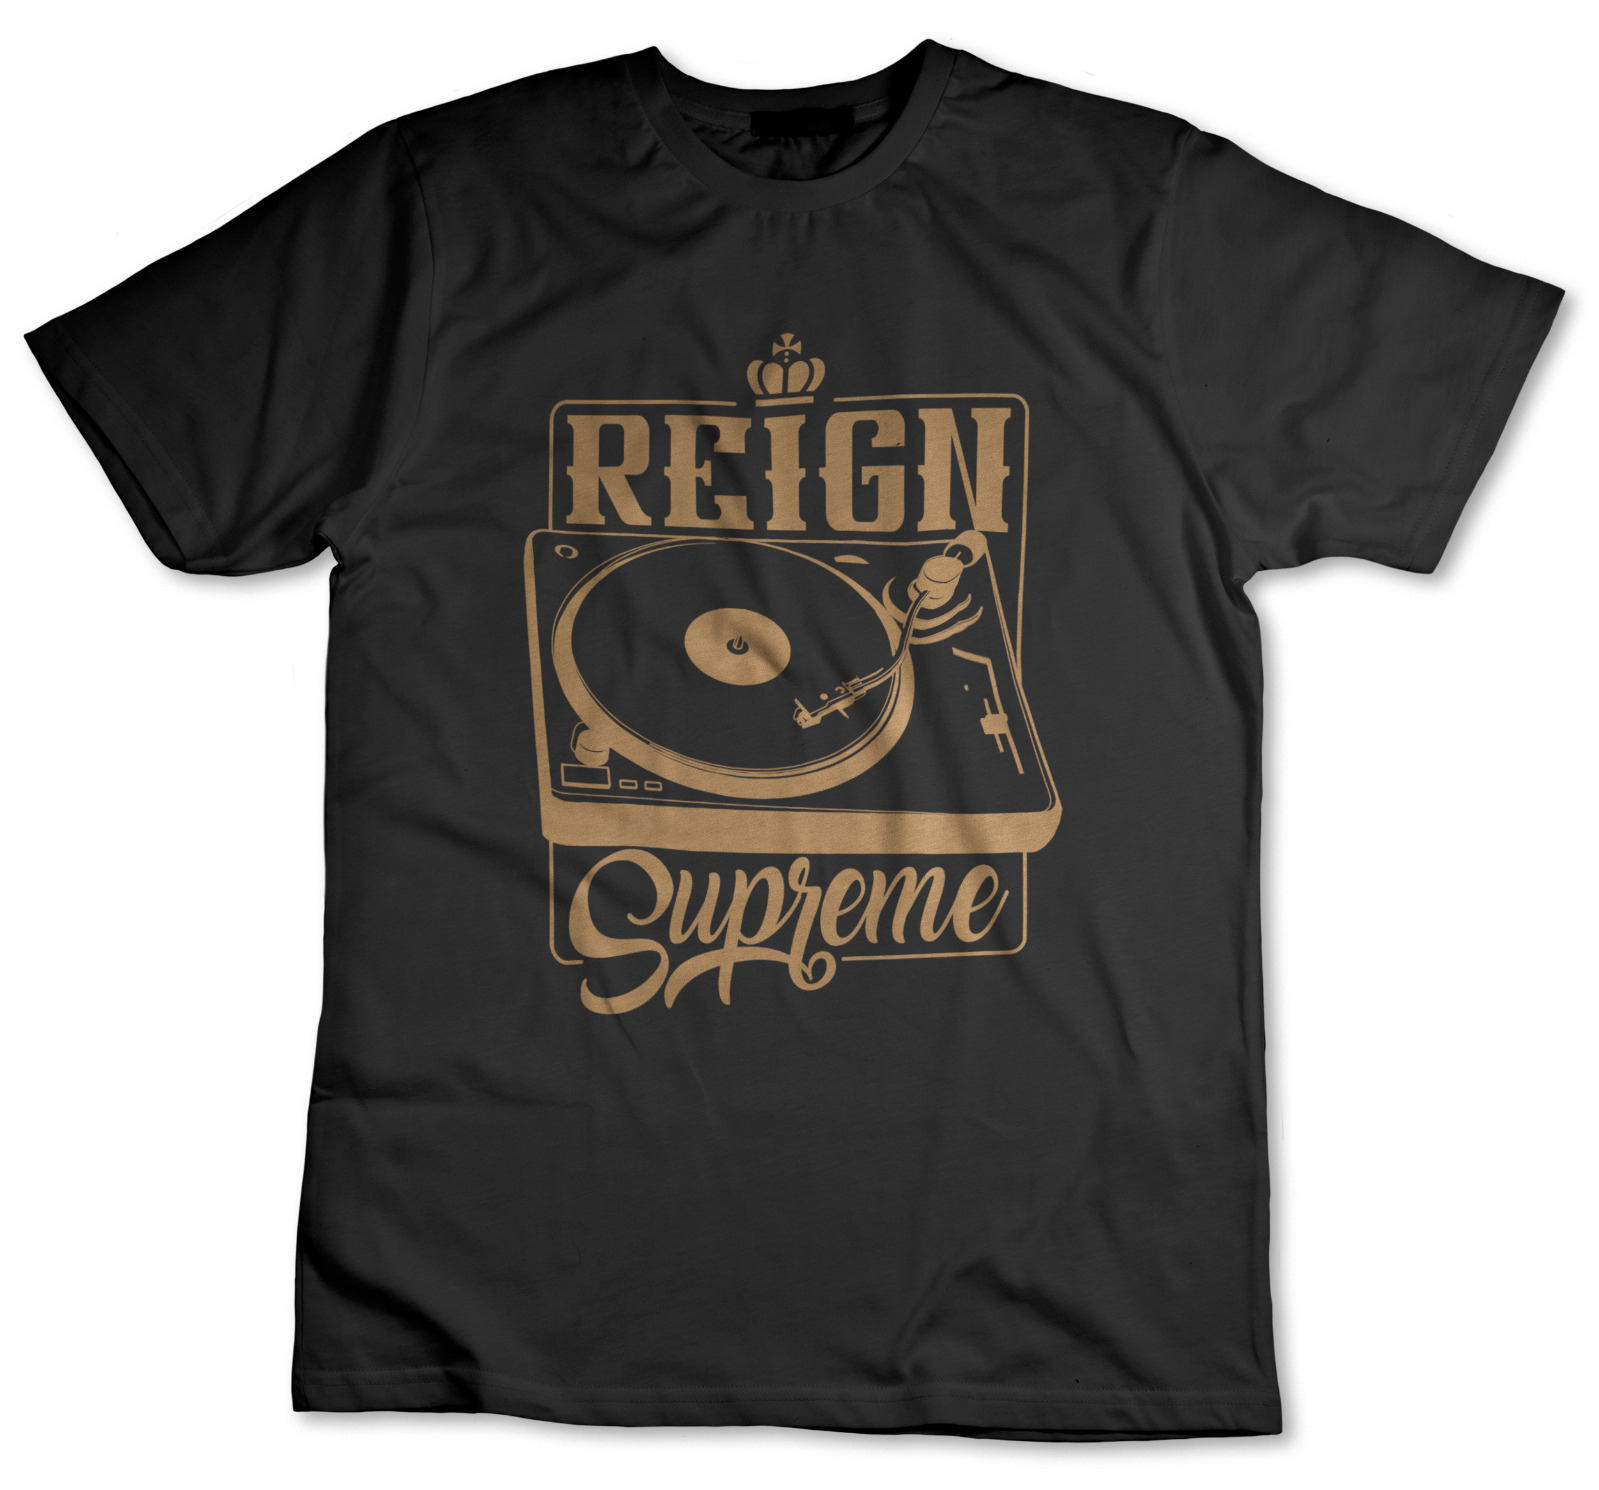 REIGN SUPREME original T-Shirt, dj clothig dj t shirt Supreme dj gear dj t shirt